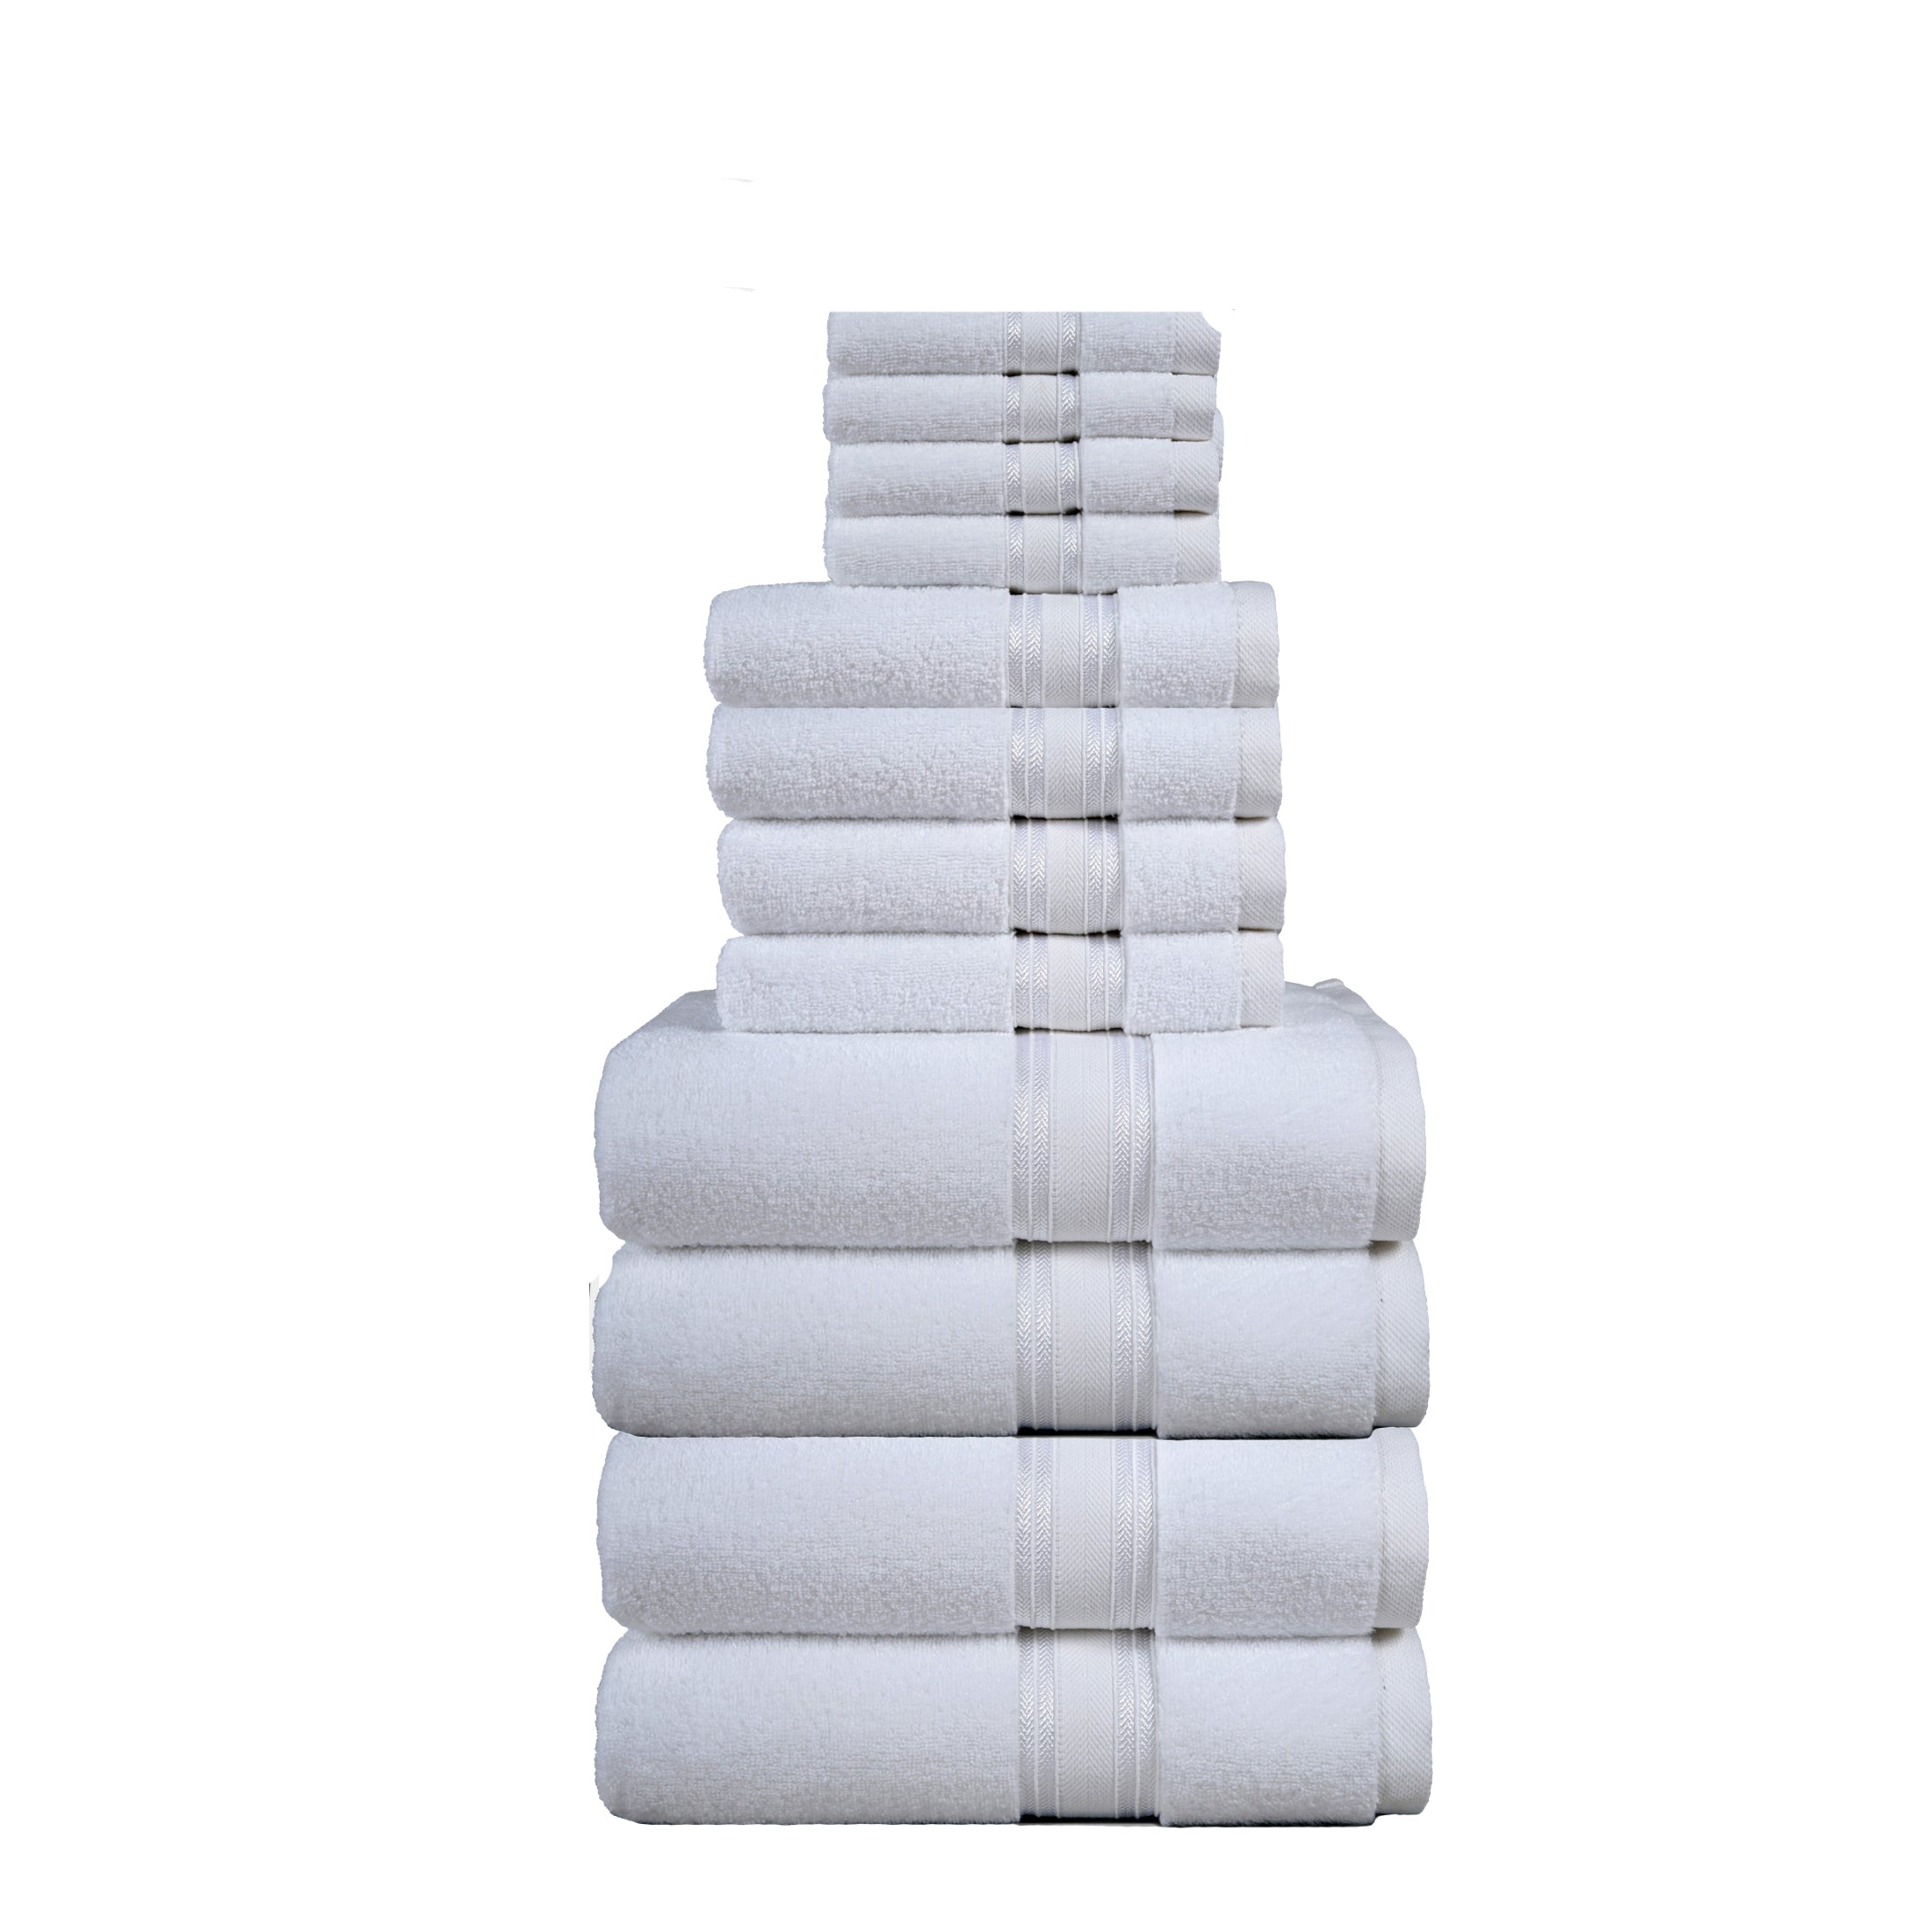 12 Piece 100% Cotton Towel Set 550GSM - White